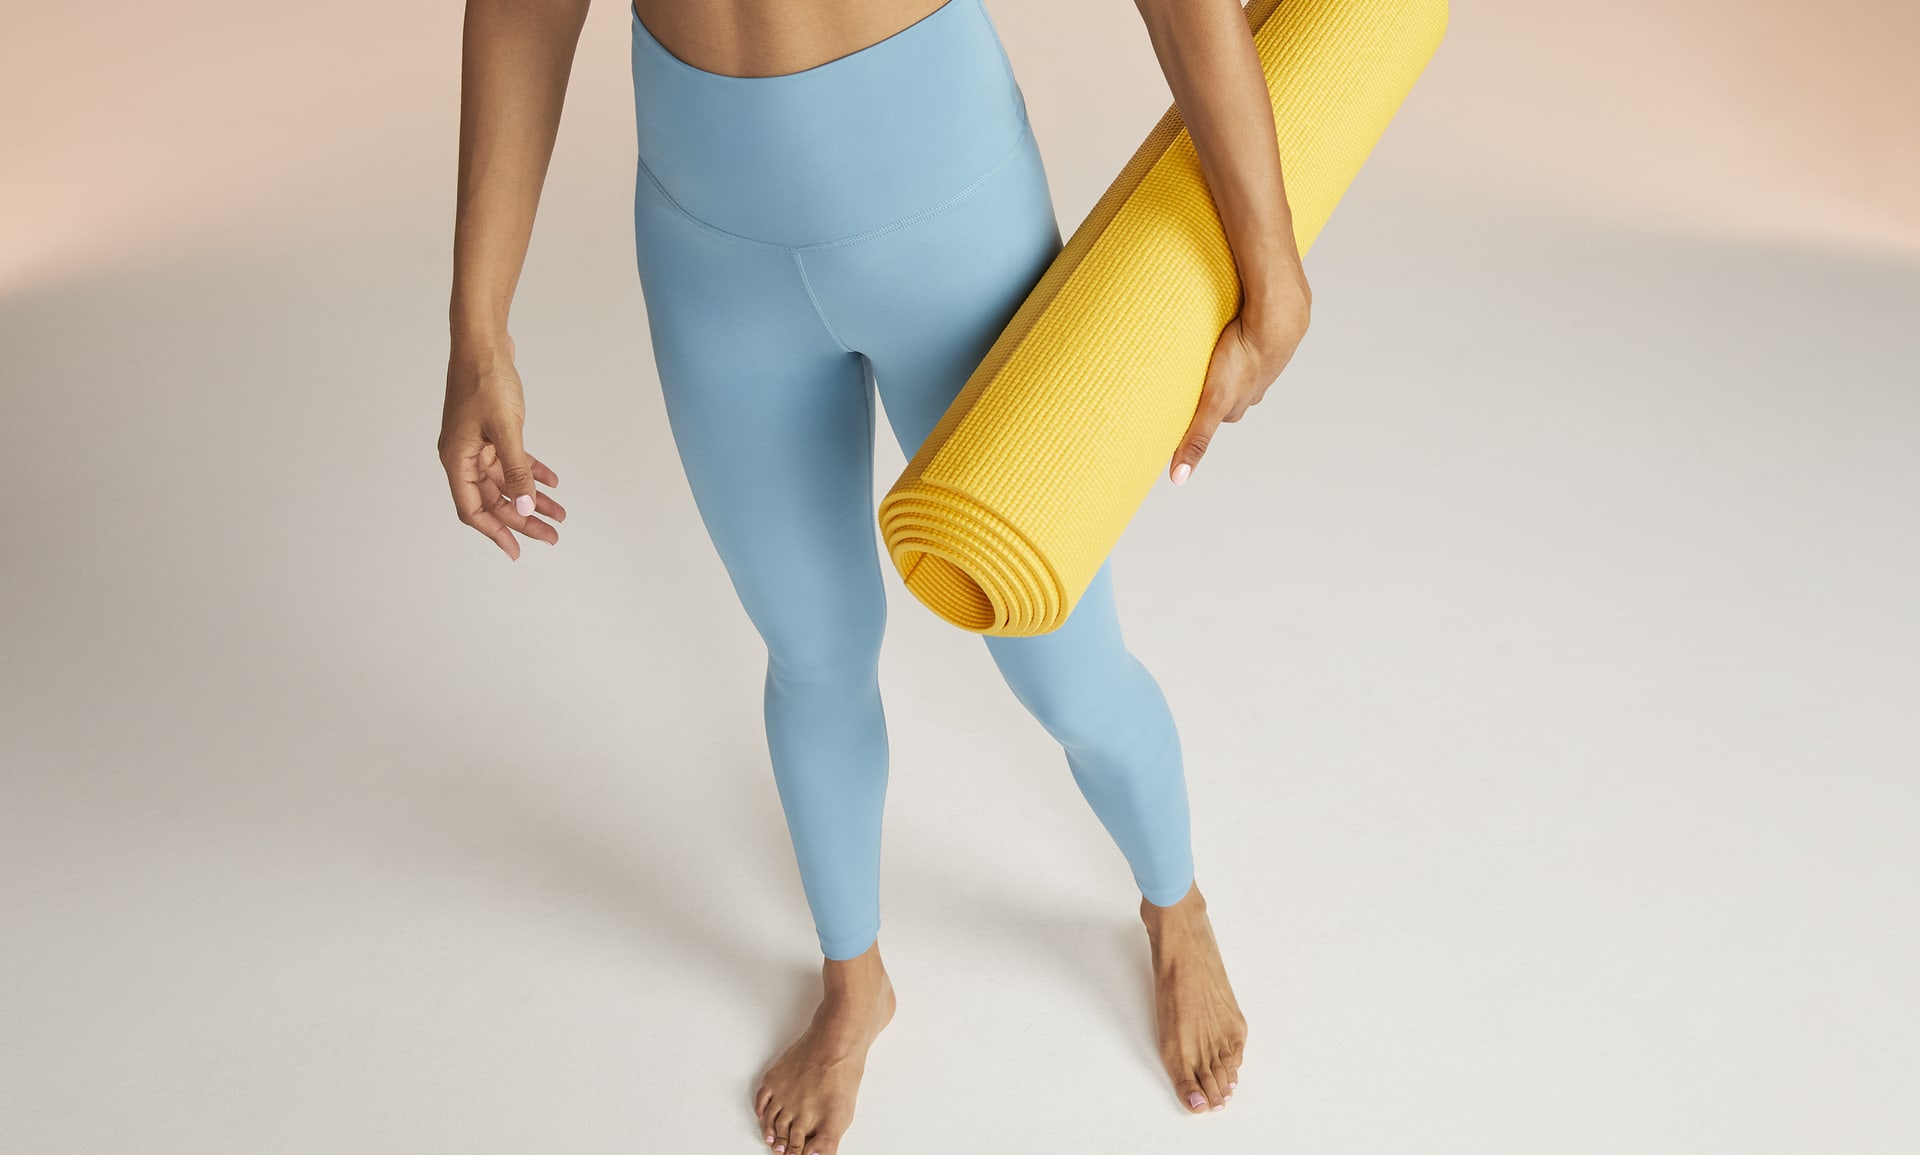 Mipaws High Waist Yoga Pants 7/8 Length - $9 (55% Off Retail